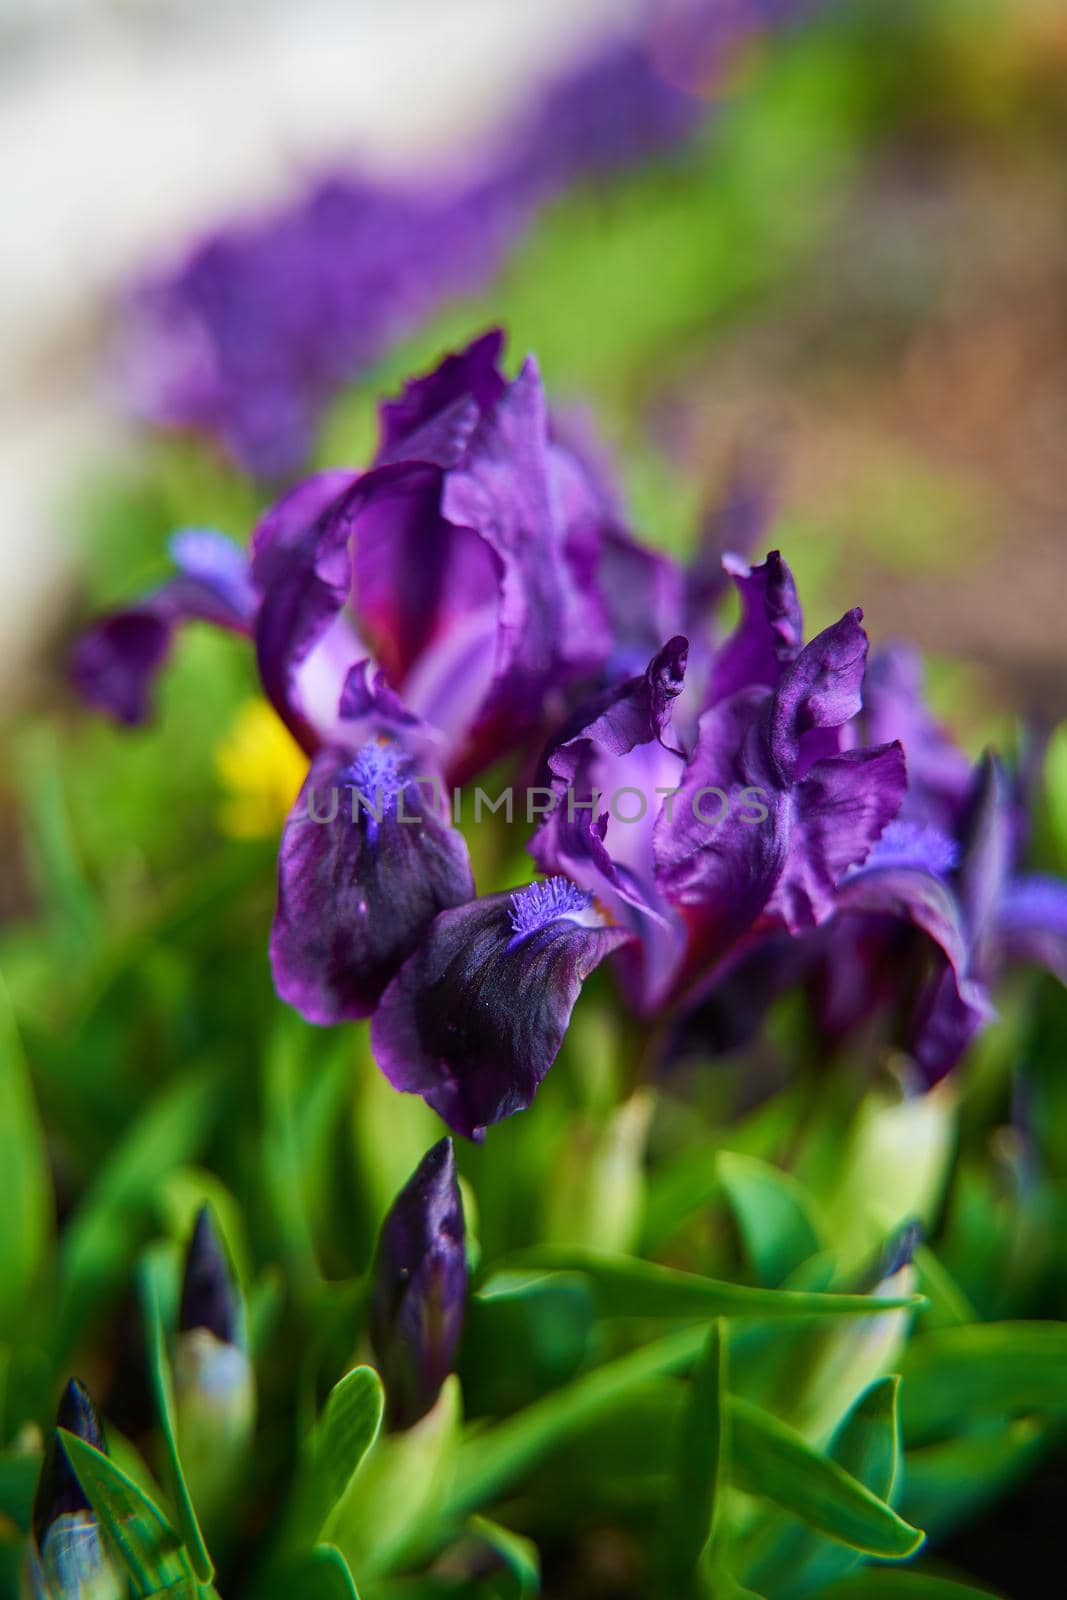 Purple iris flower close up in the garden by Try_my_best